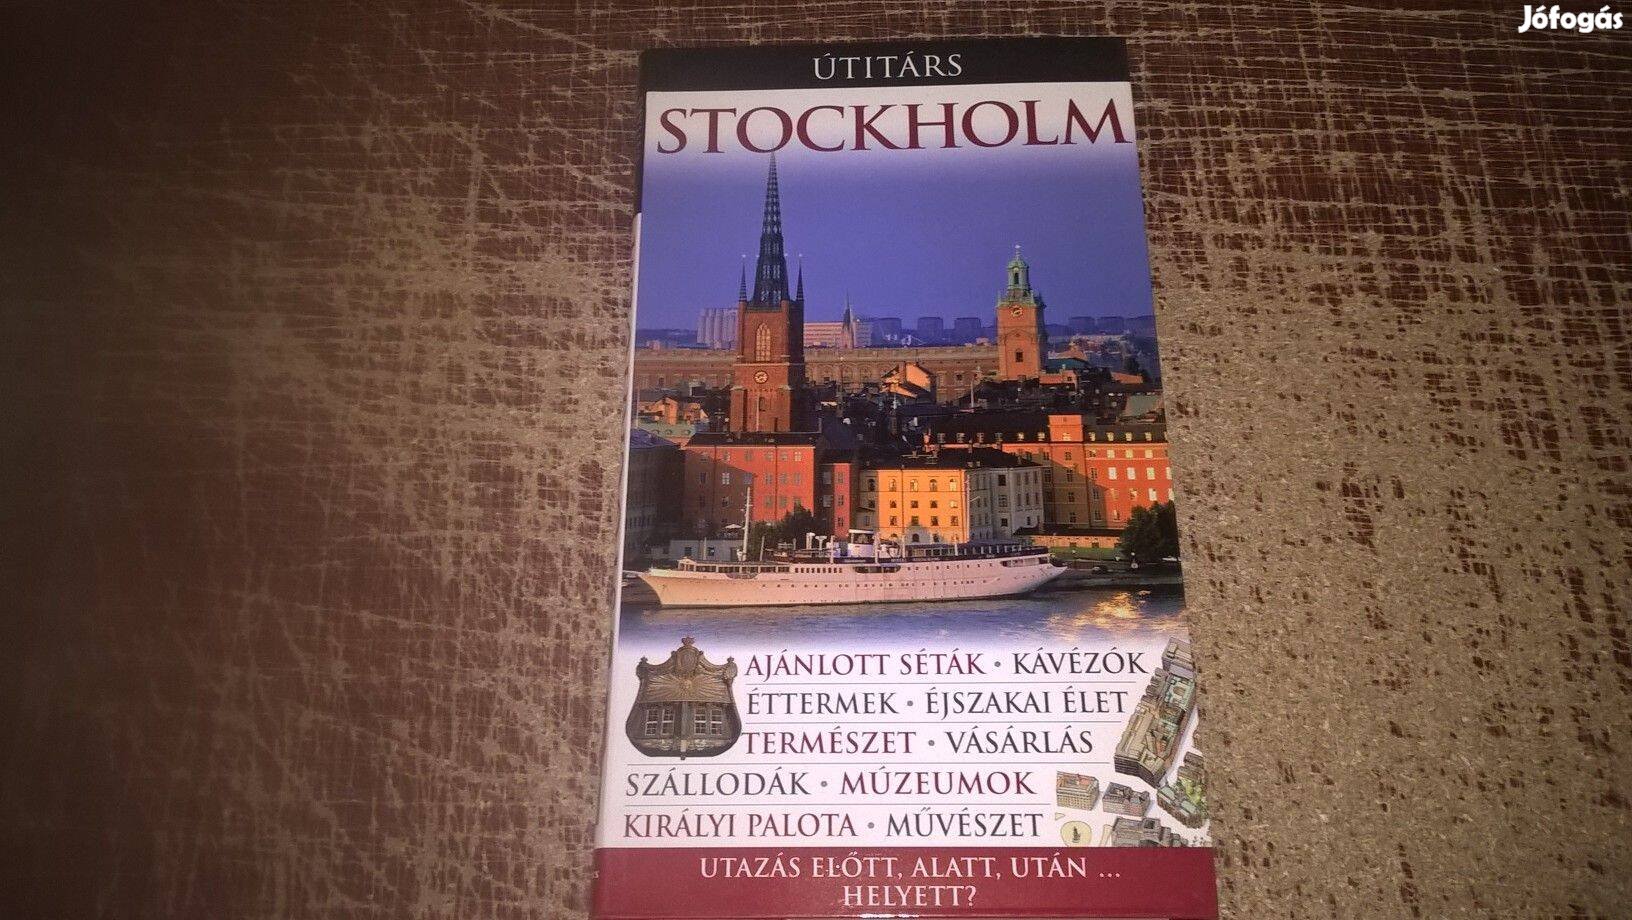 Stockholm útitárs